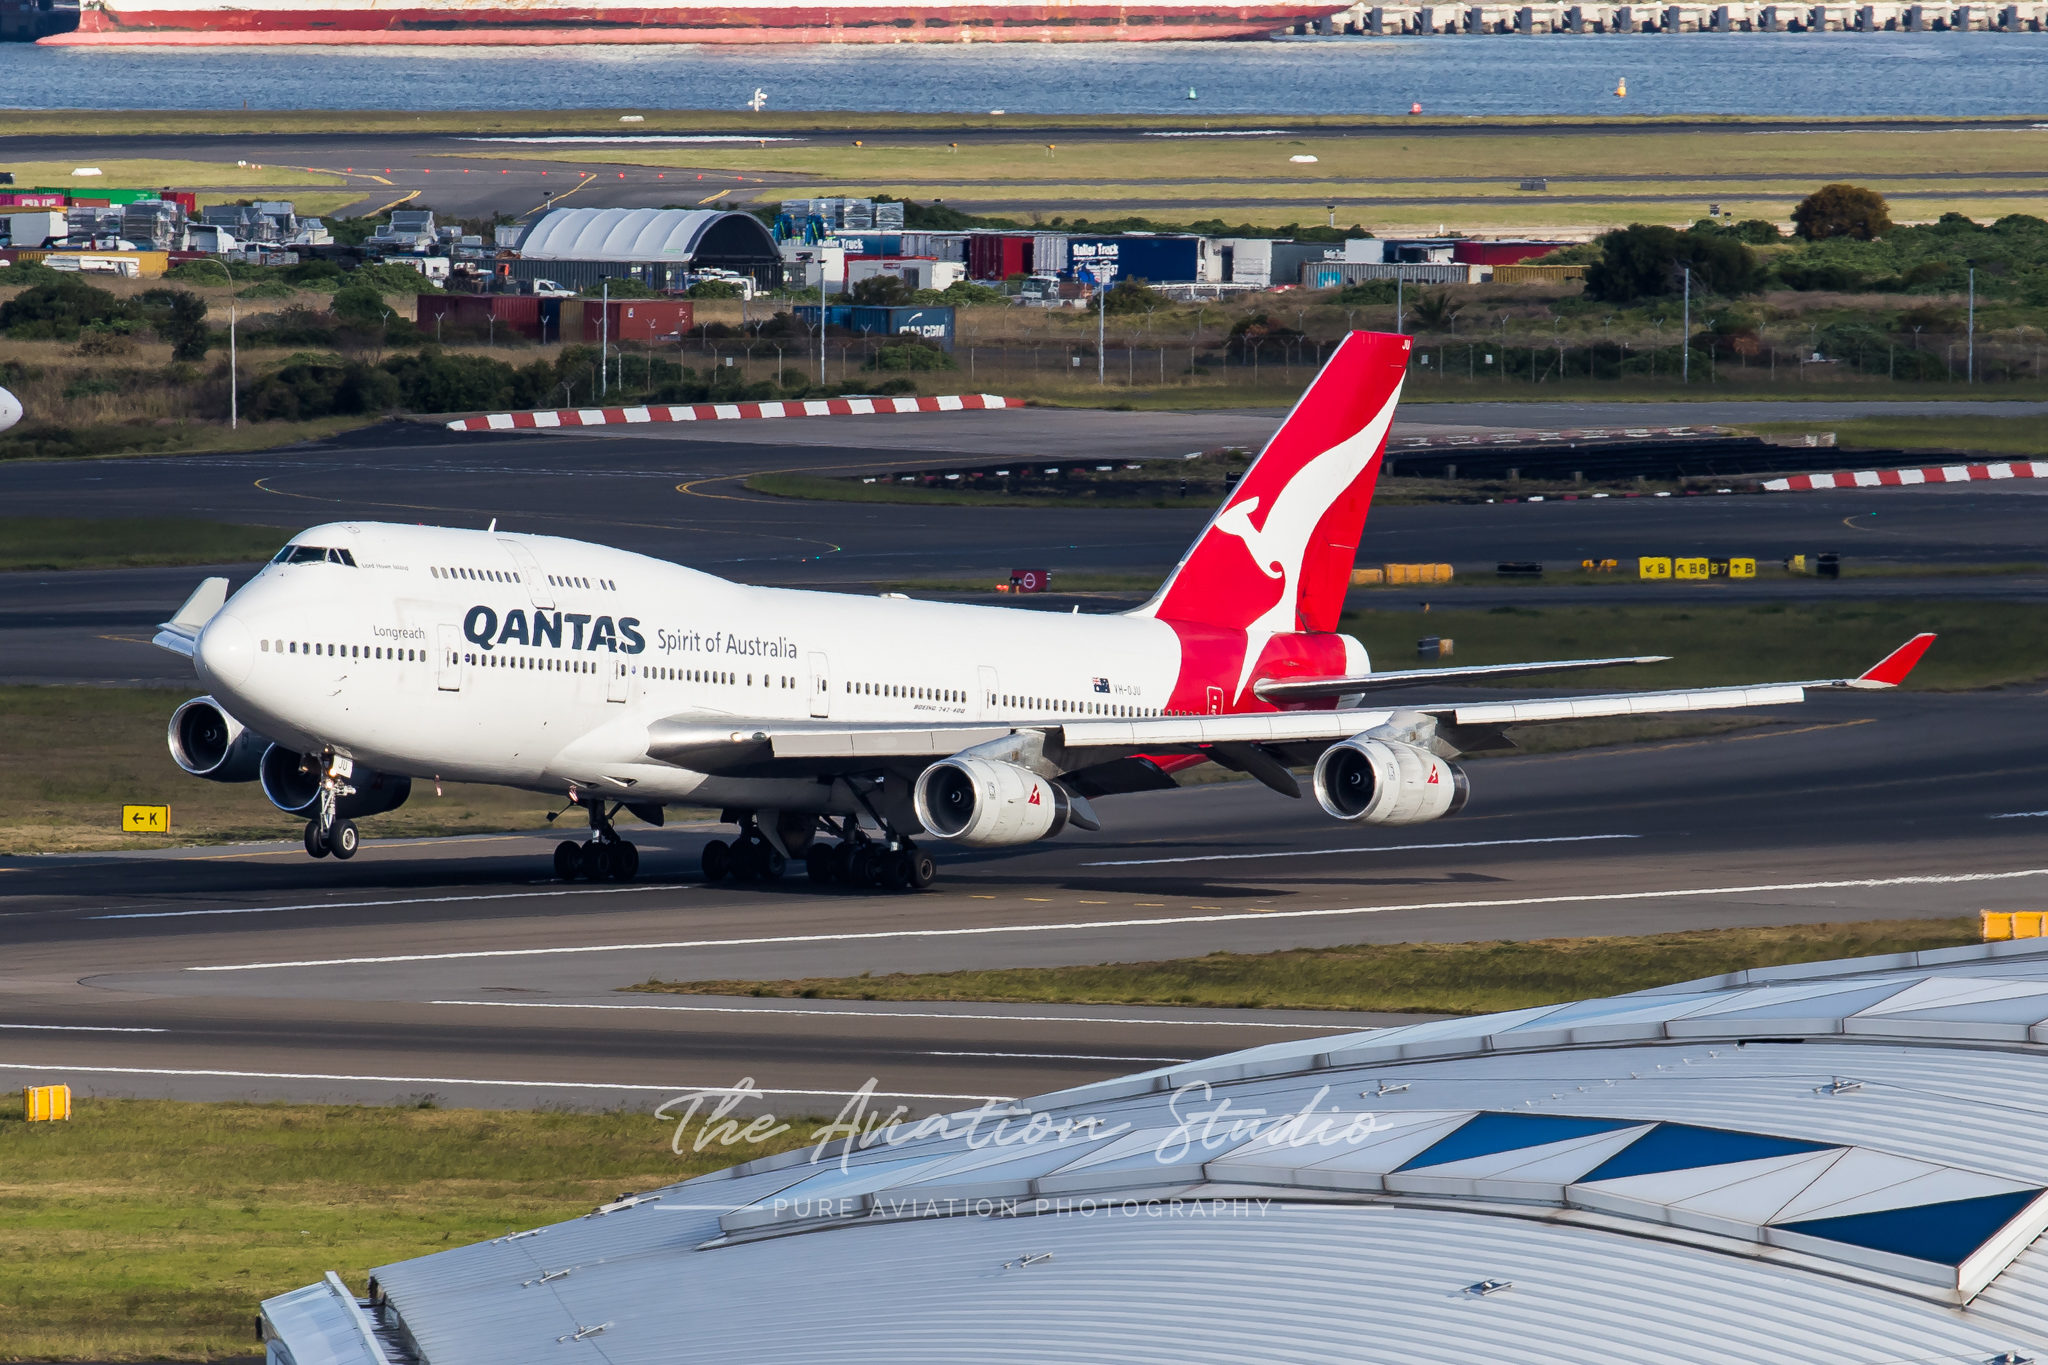 Qantas 747-400 VH-OJU departs Australia for the last time (Image: Rory Delaney)